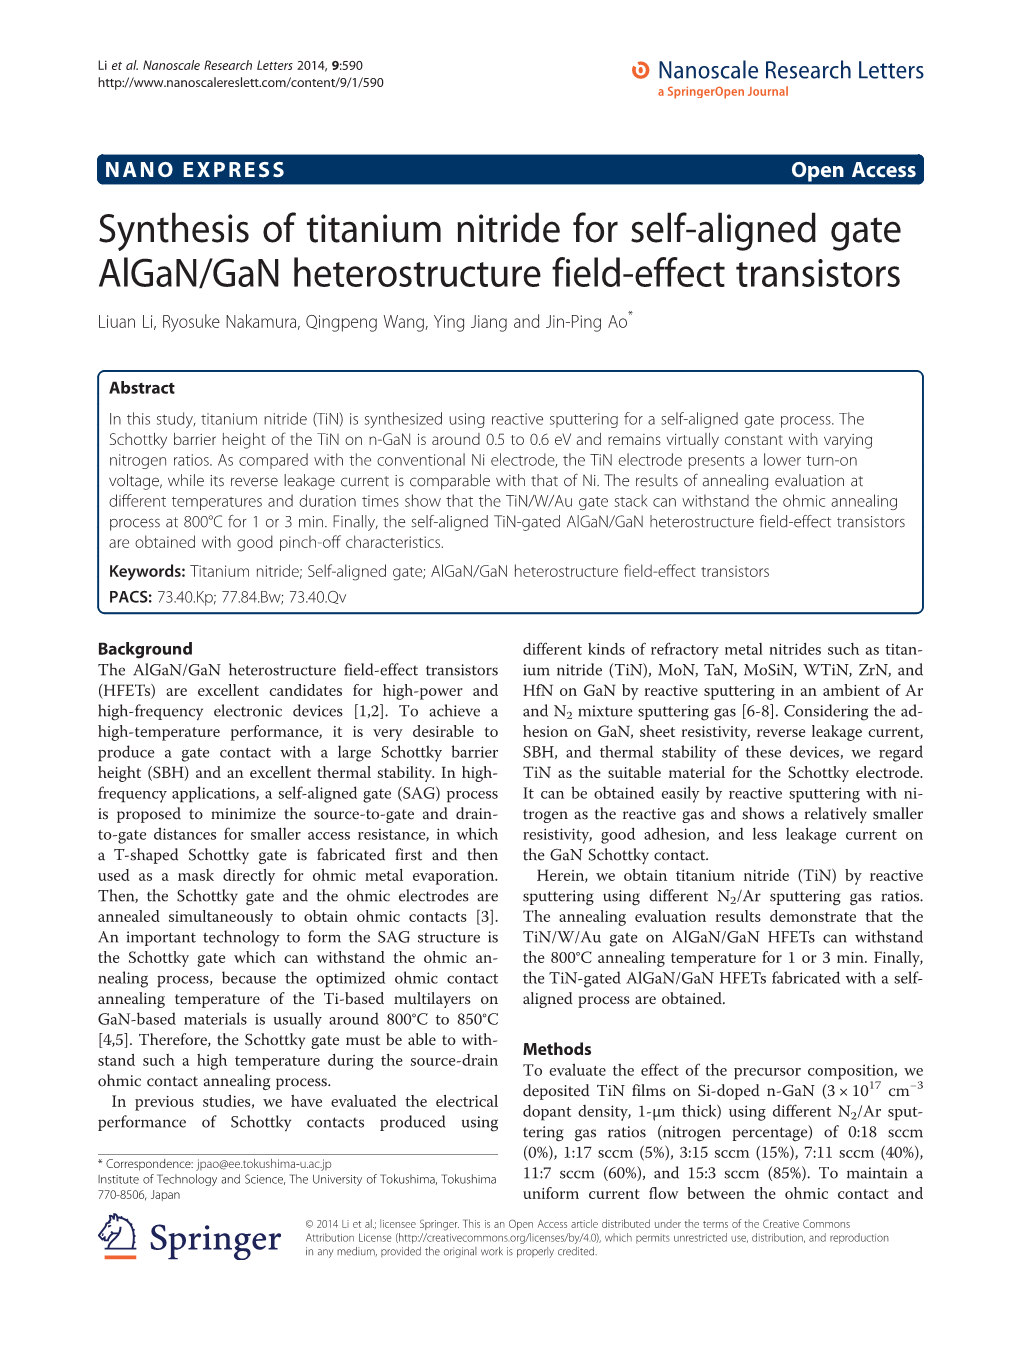 Synthesis of Titanium Nitride for Self-Aligned Gate Algan/Gan